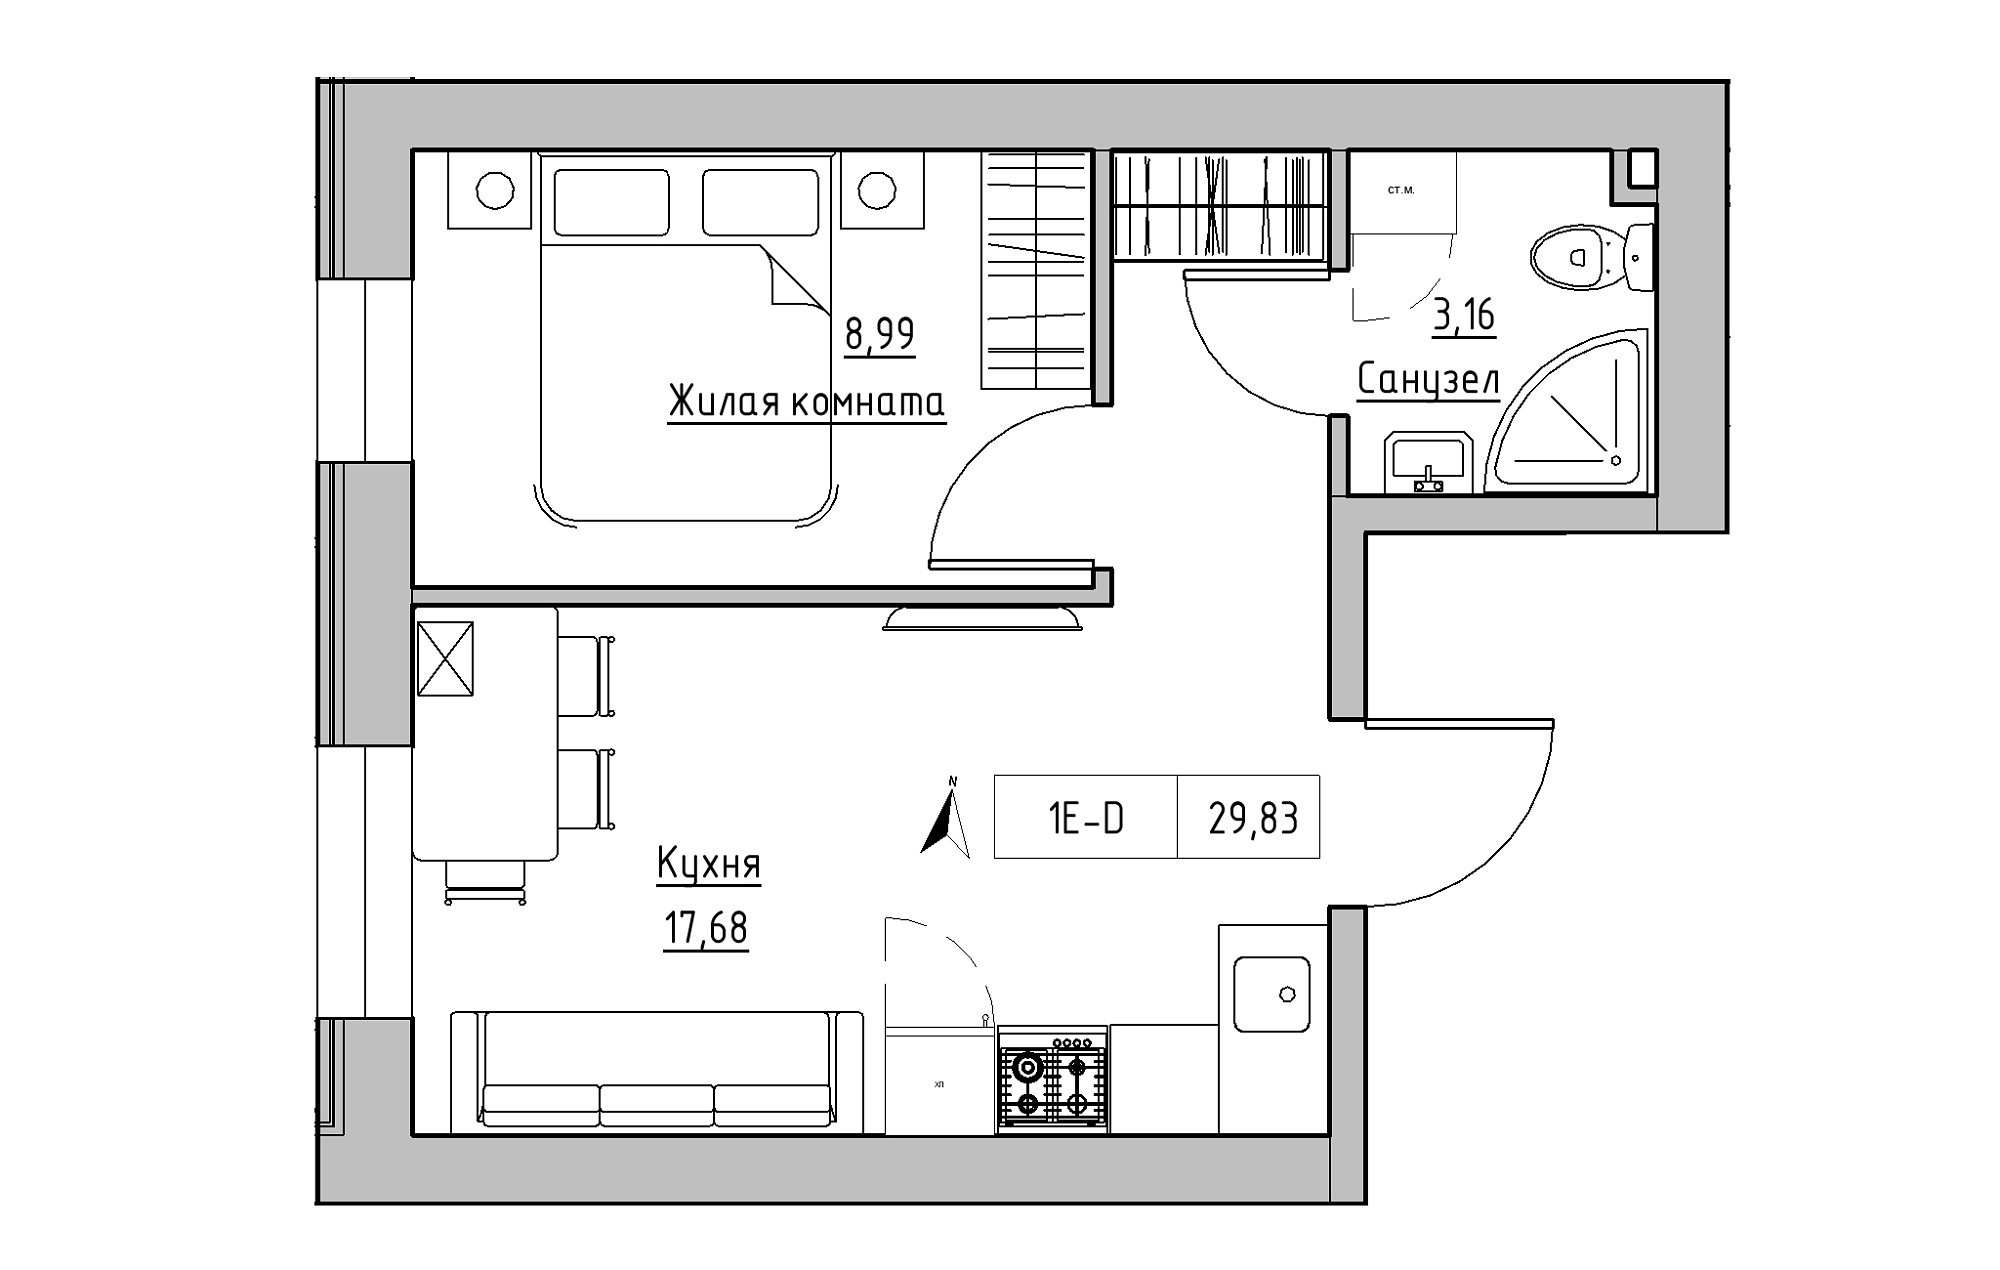 Planning 1-rm flats area 29.83m2, KS-019-01/0003.